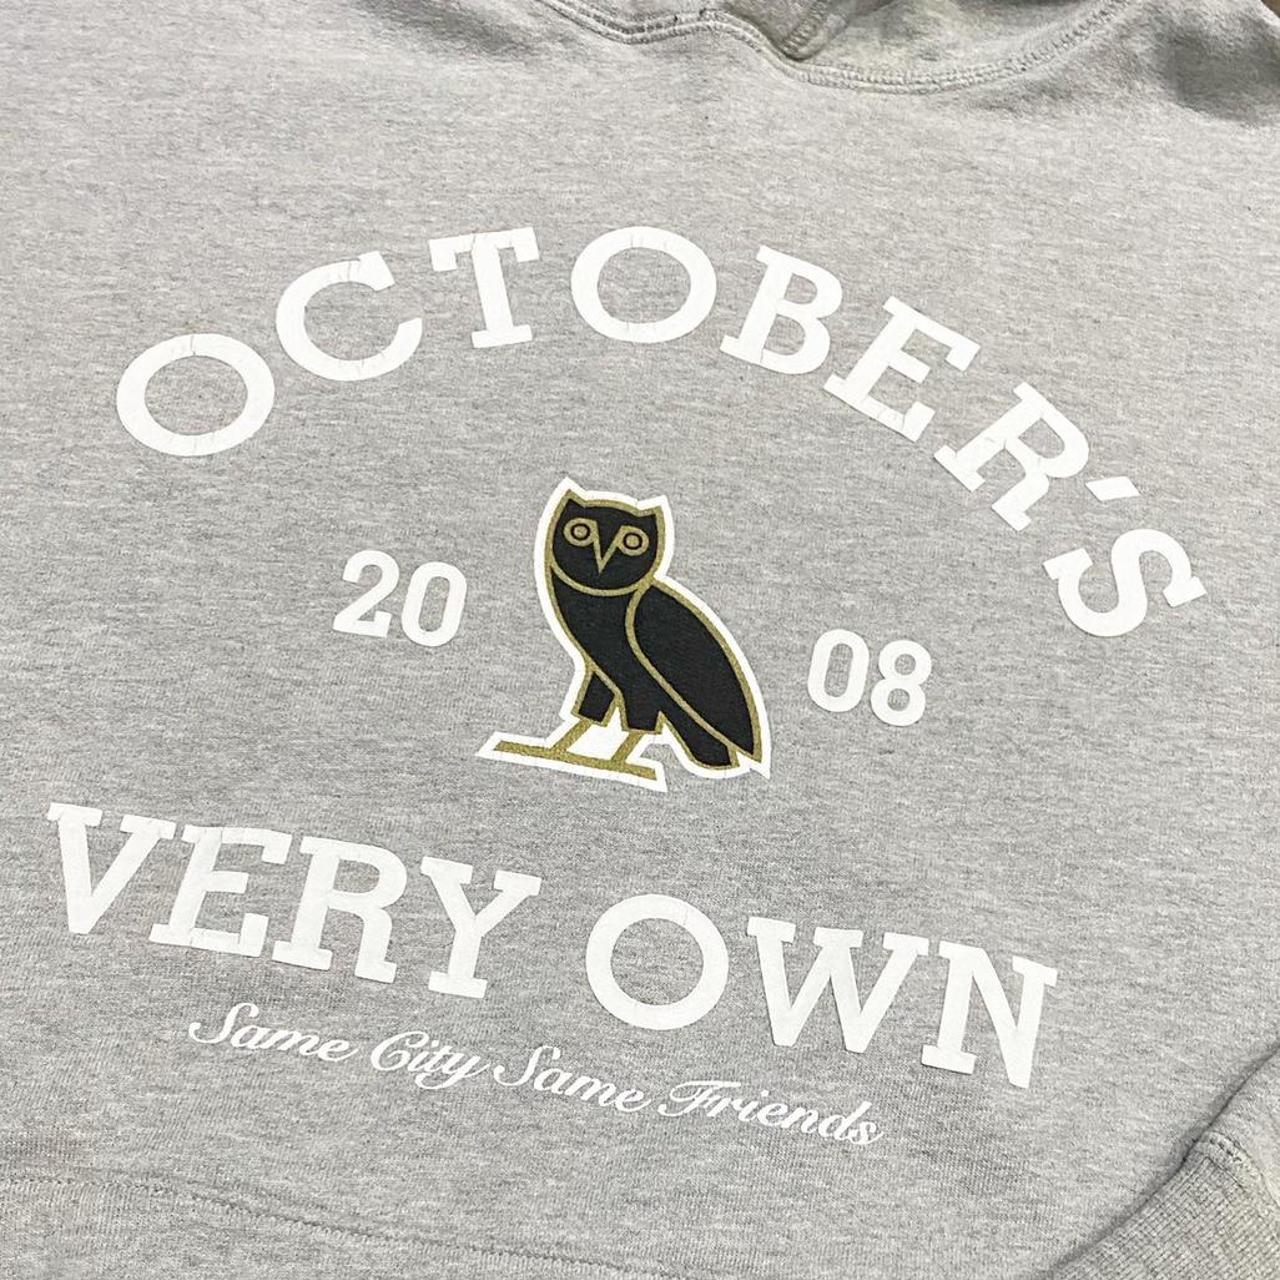 October’s very own college hoodie